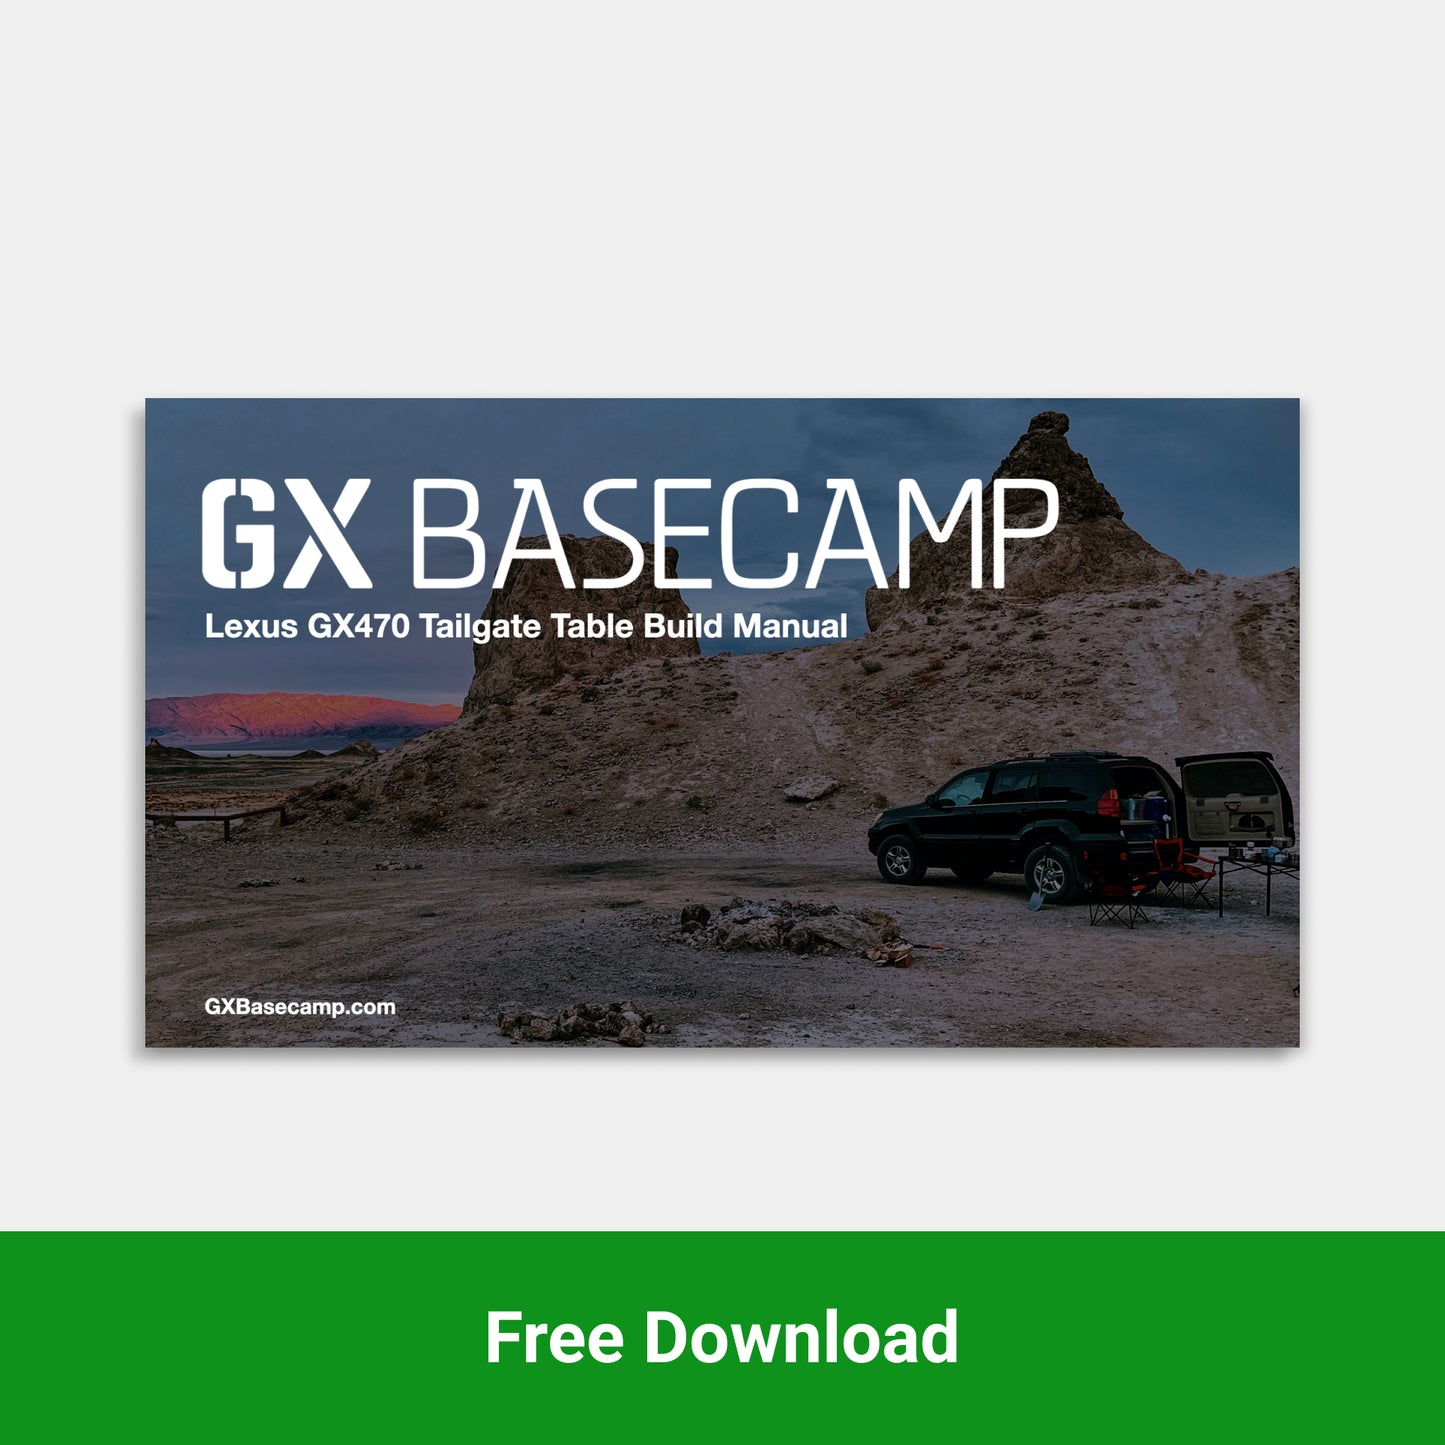 Lexus GX470 Tailgate Table Build Manual - Go Xplore Basecamp